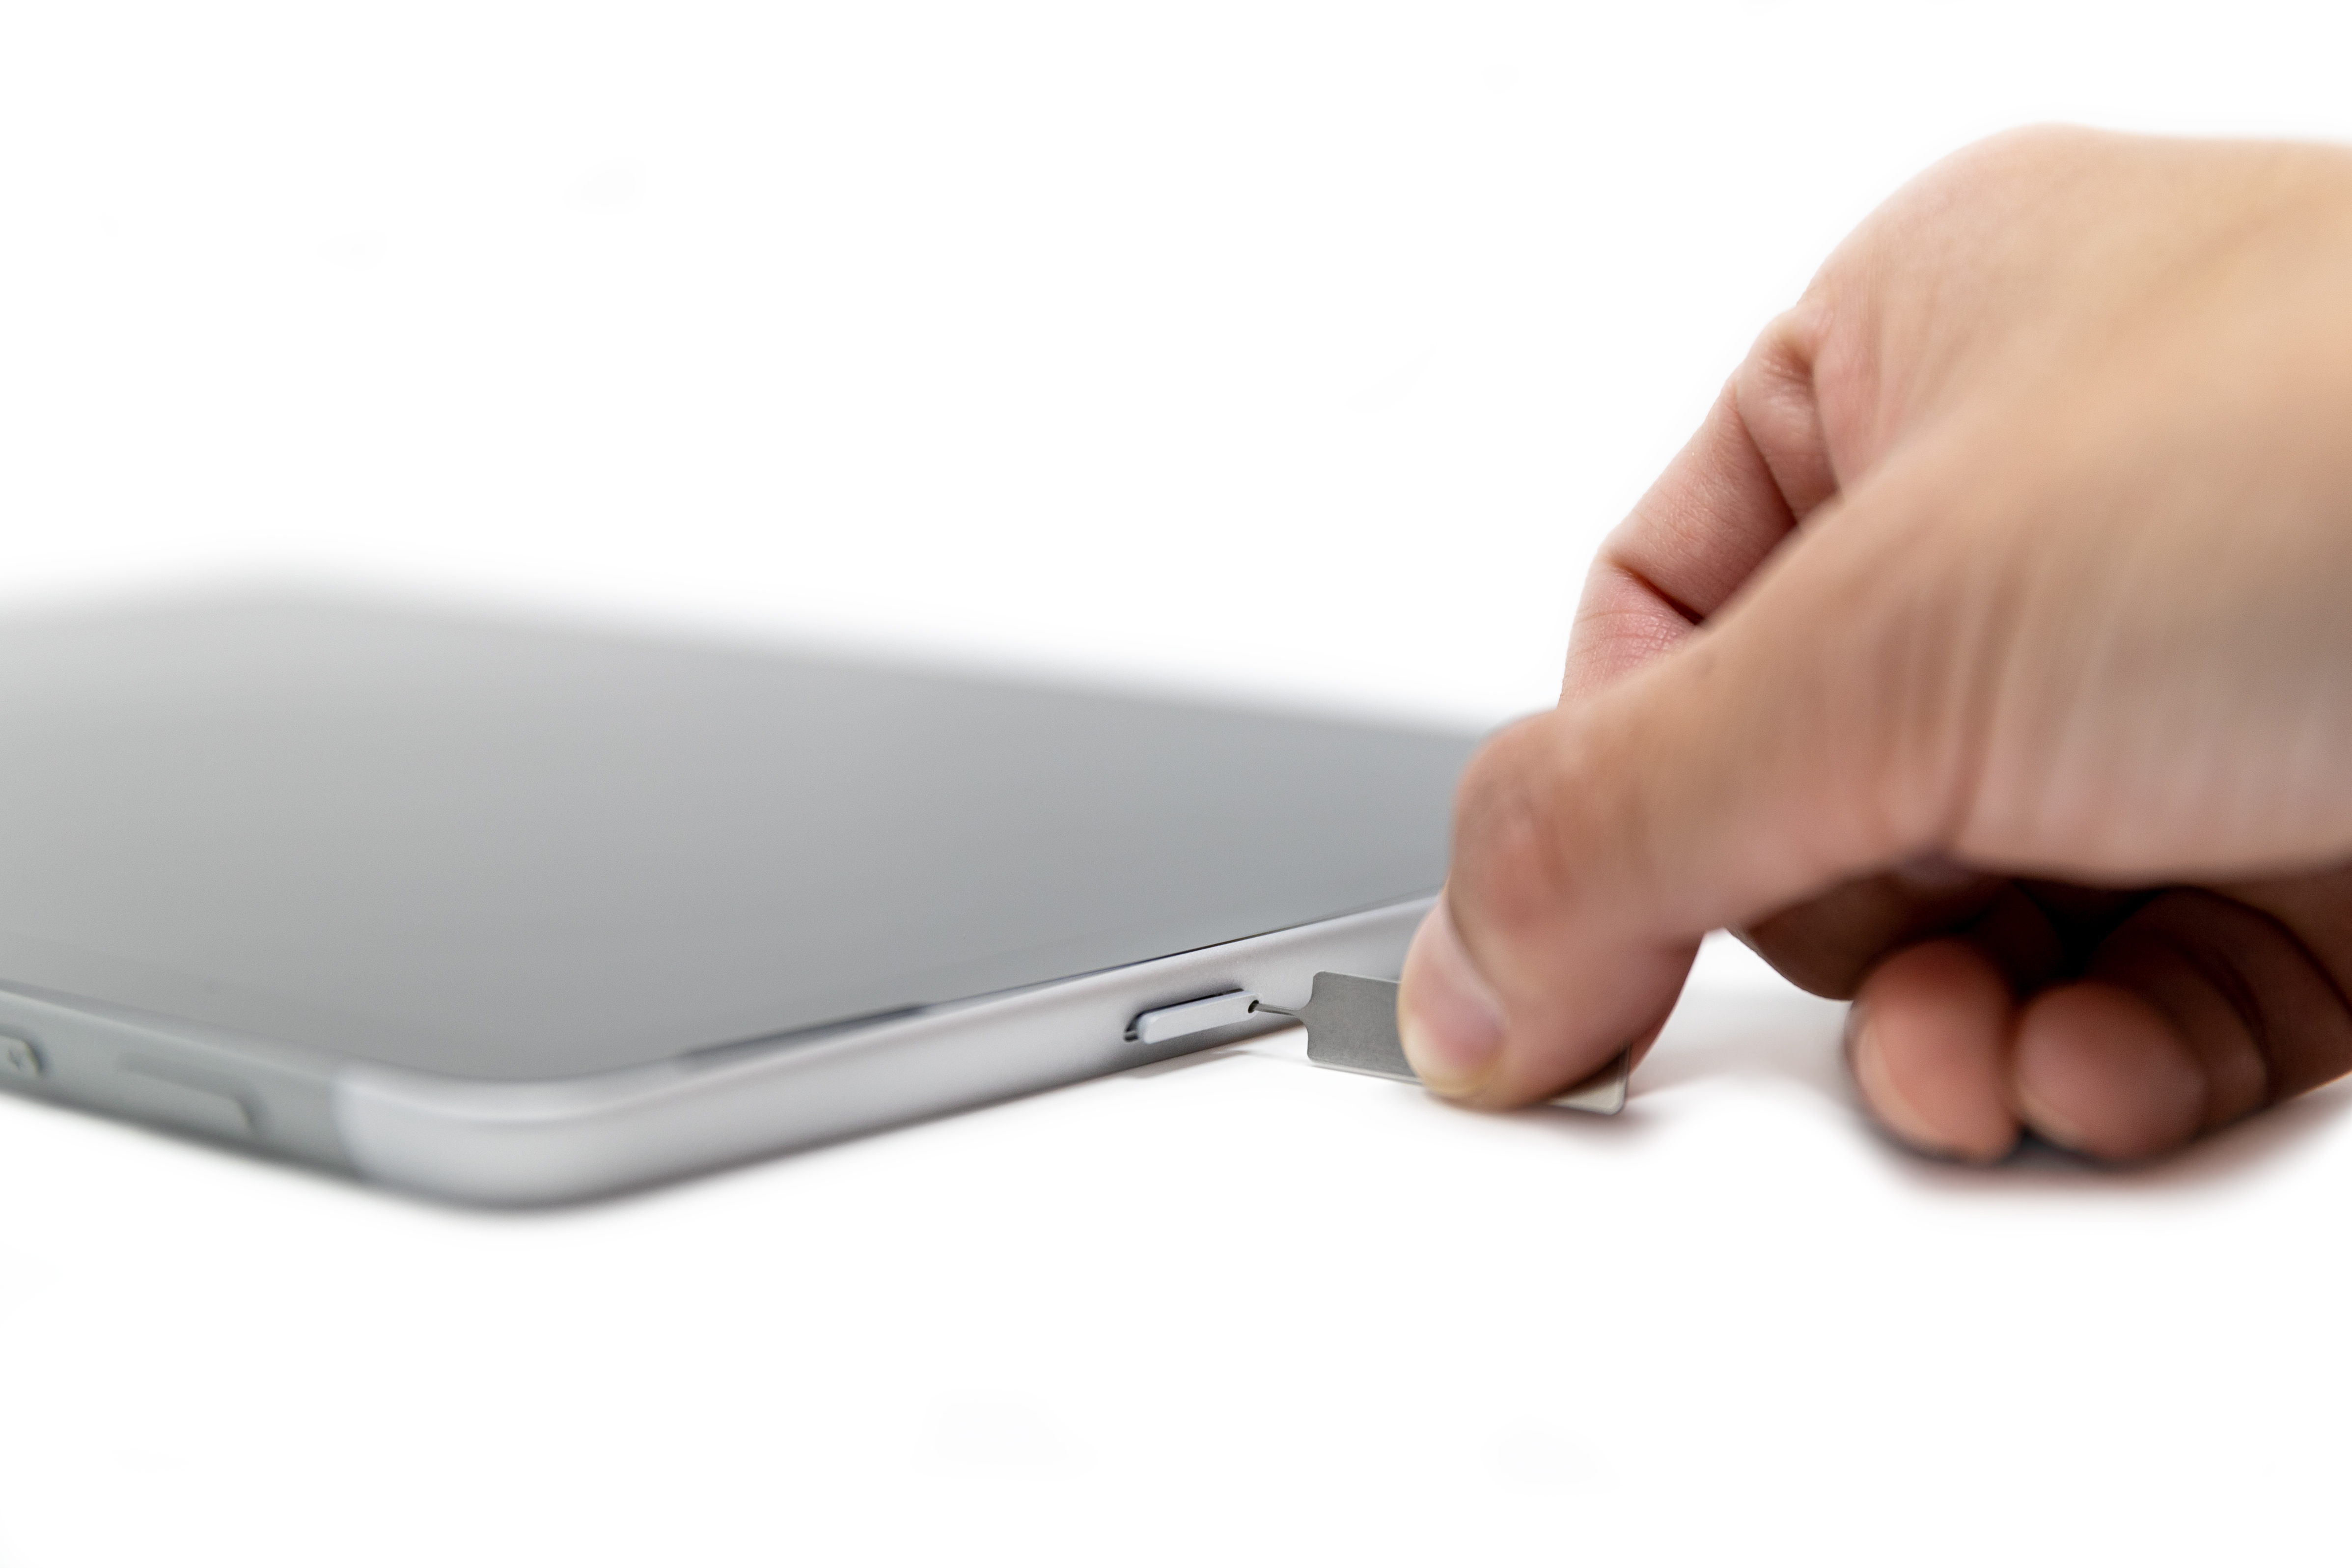 Surface Go 2'nin SIM kart yuvasına SIM pin takan bir kişi.